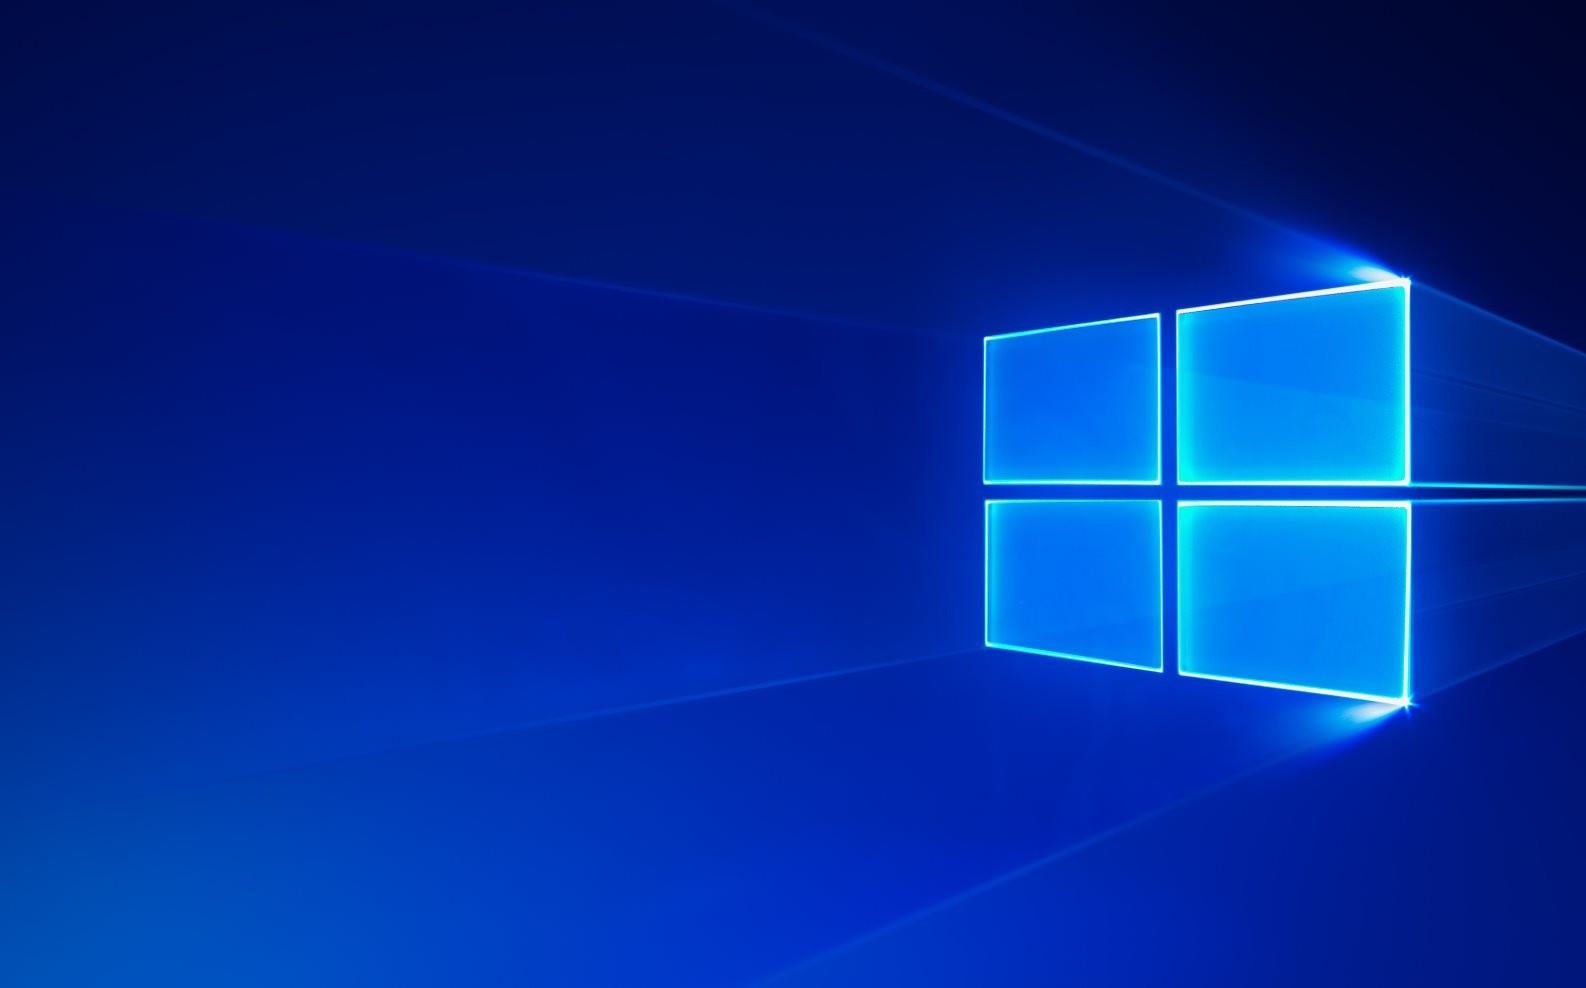 Candy Crush Saga to jeopardize productivity of Windows 10 users